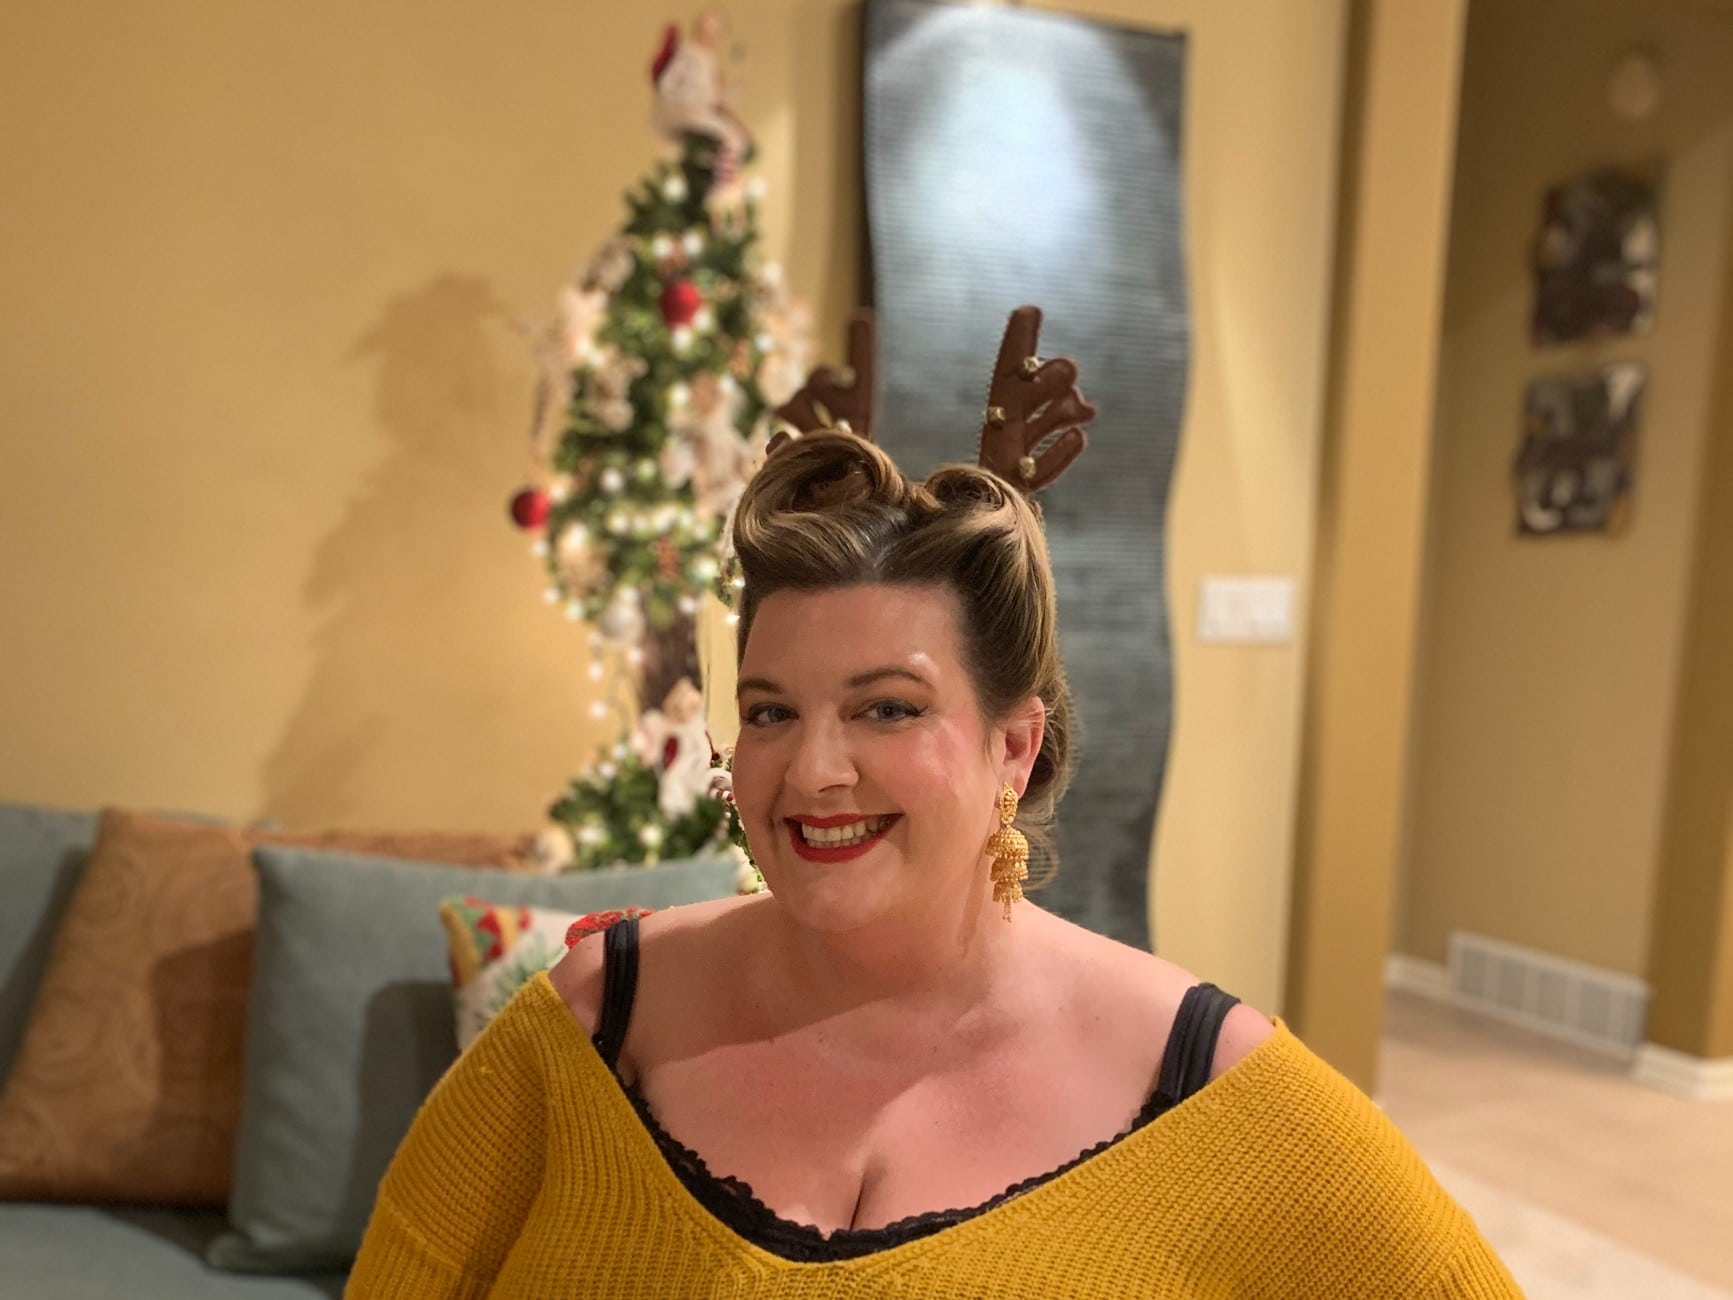 Jezebel is smiling into the camera wearing reindeer ears.